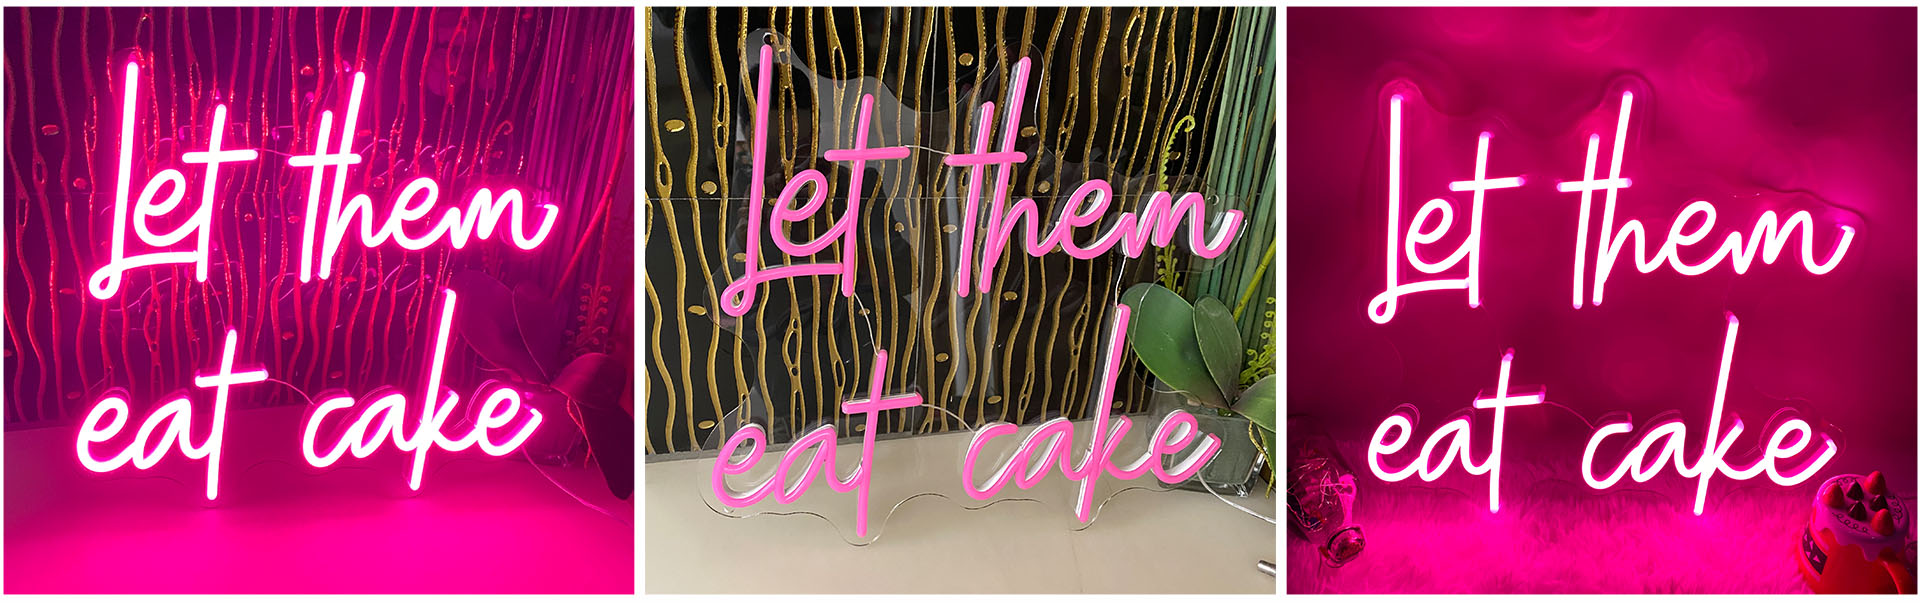 Let them eat cake